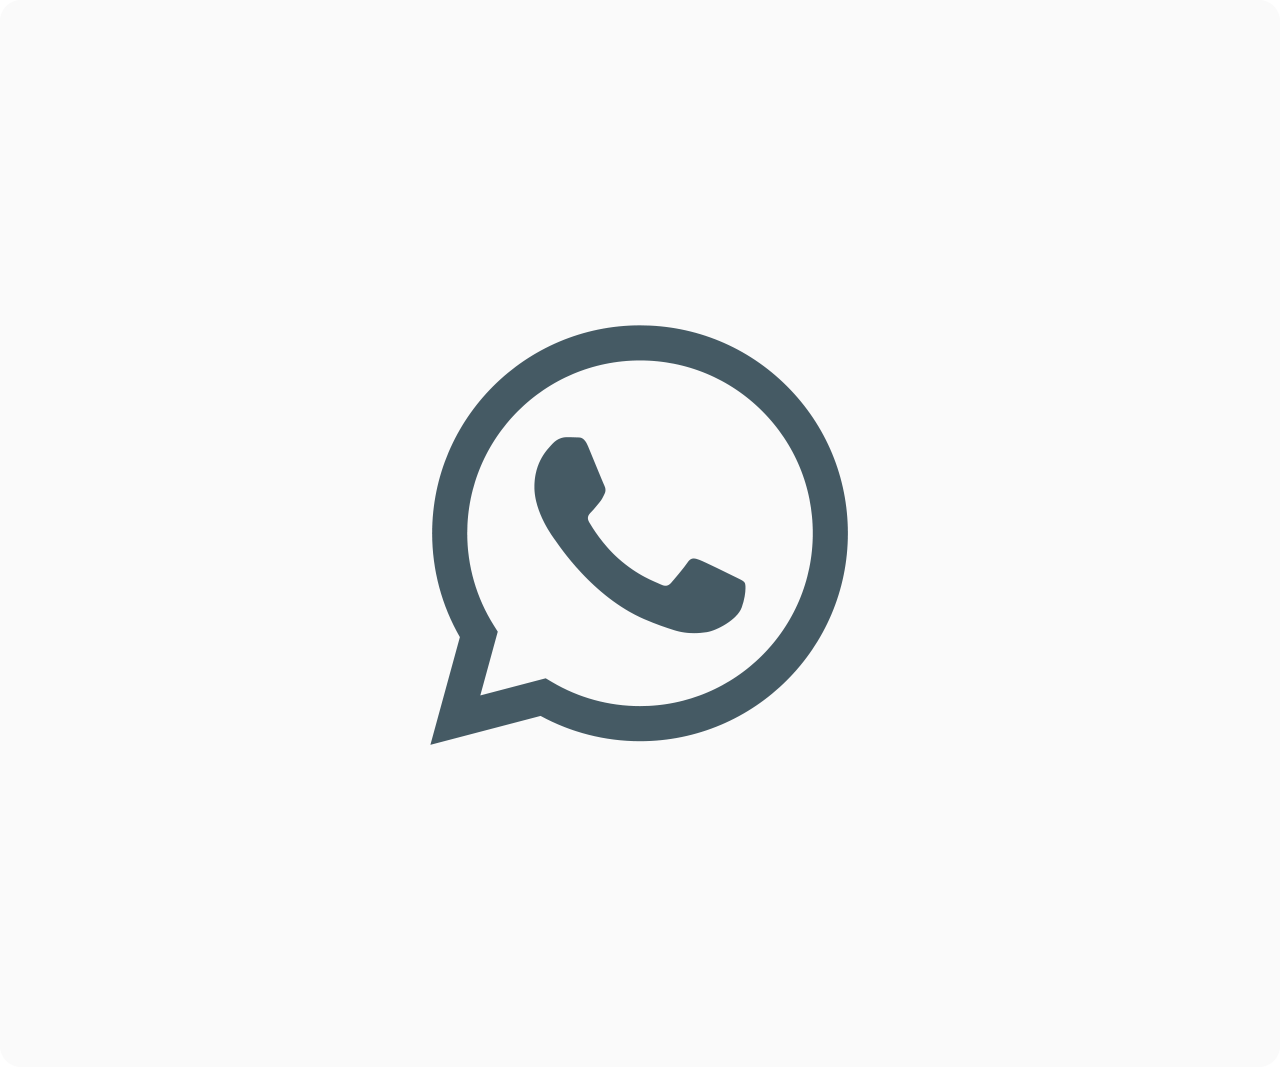 Green Phone Logo - WhatsApp Brand Resources